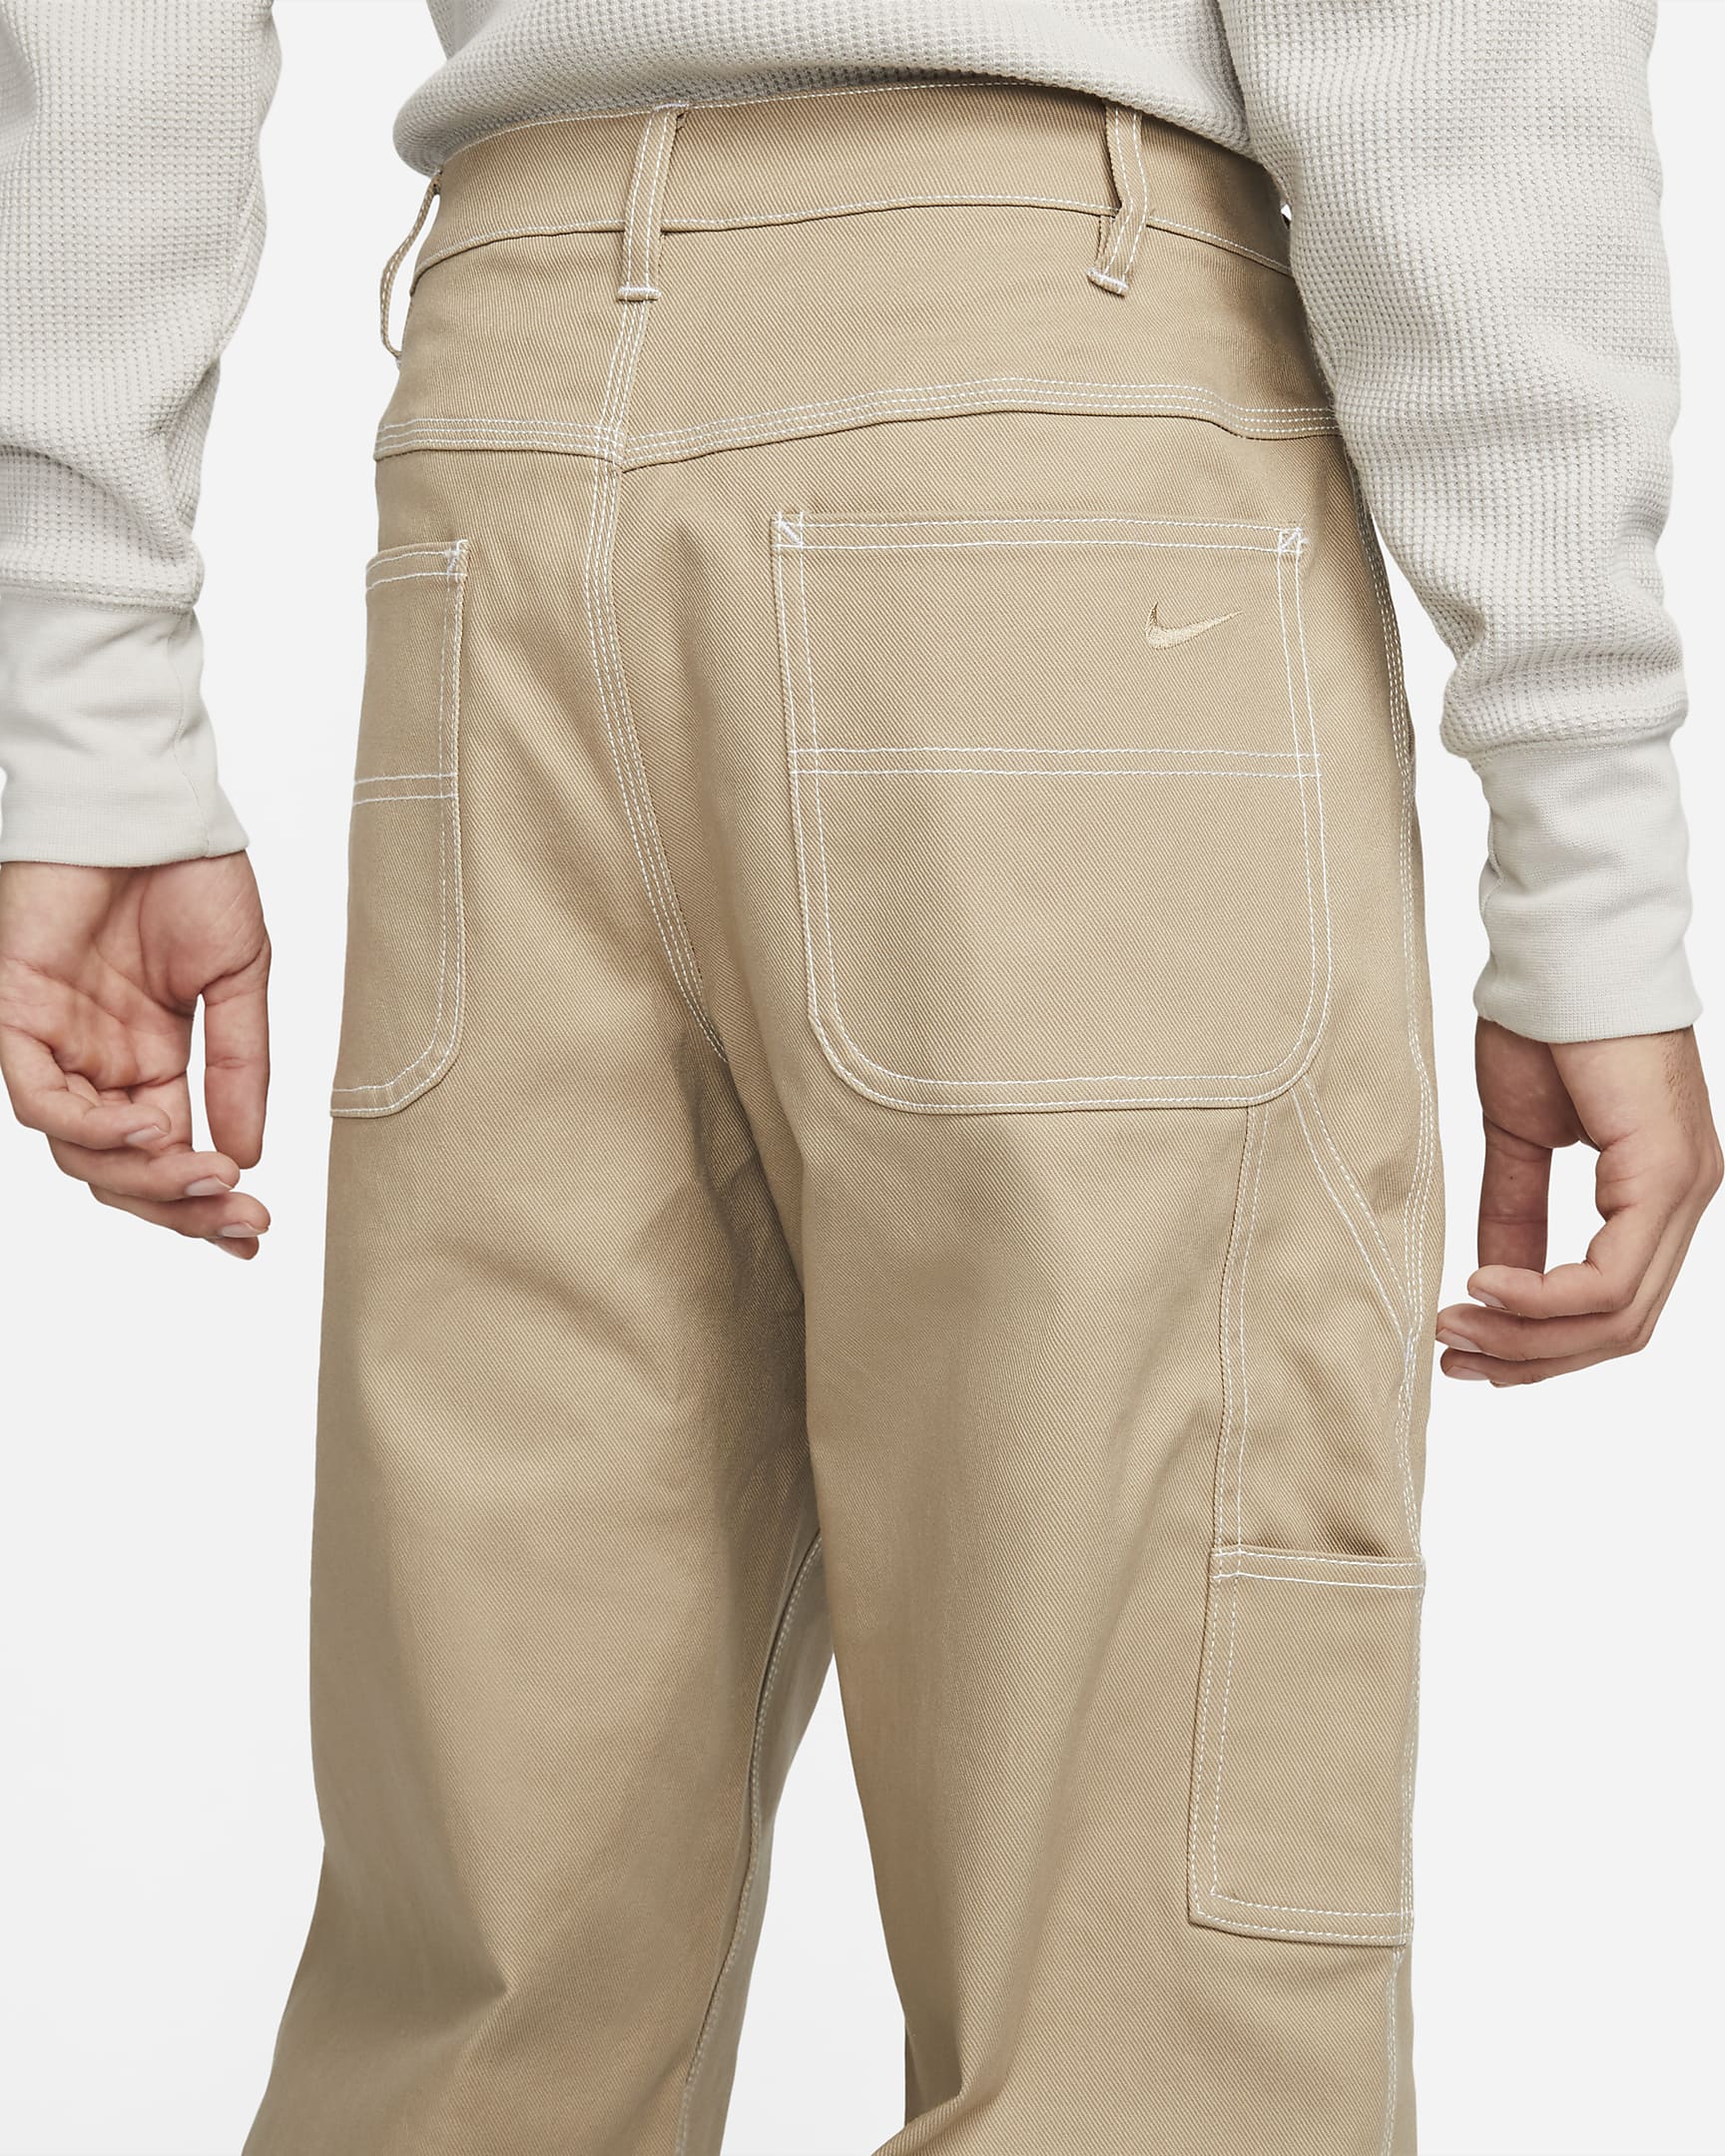 Nike Life Men's Carpenter Pants